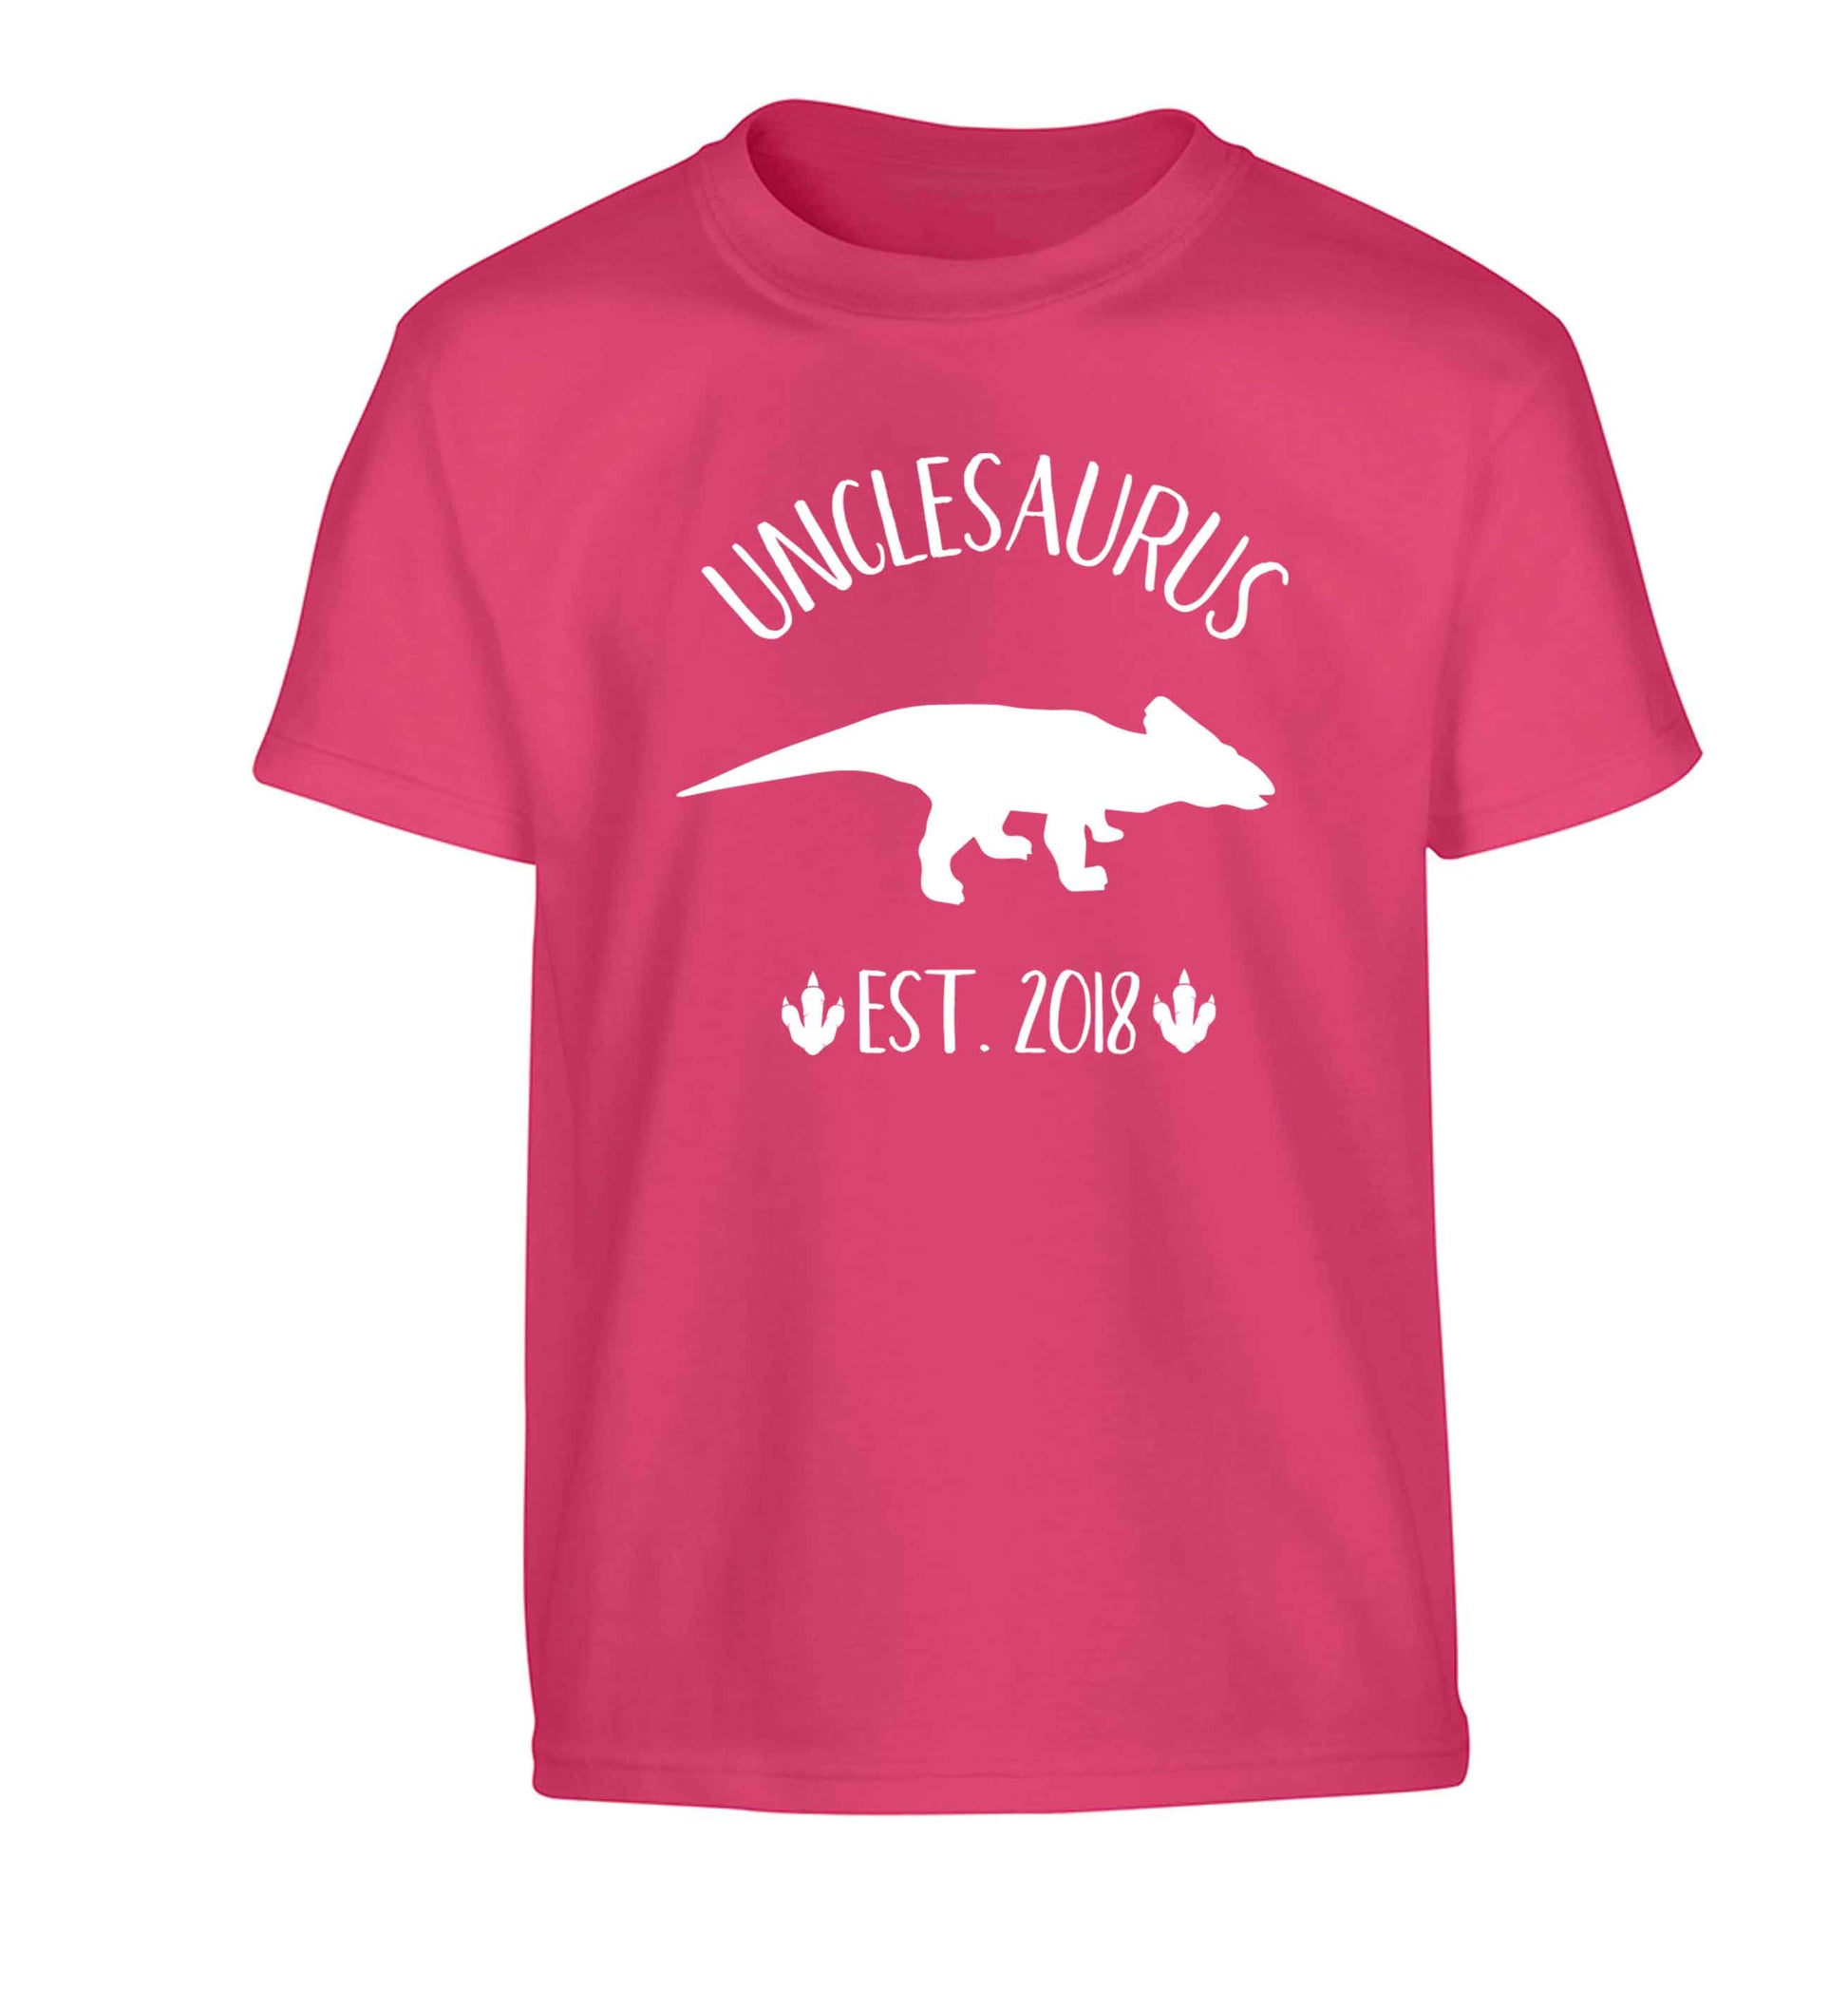 Personalised unclesaurus since (custom date) Children's pink Tshirt 12-13 Years